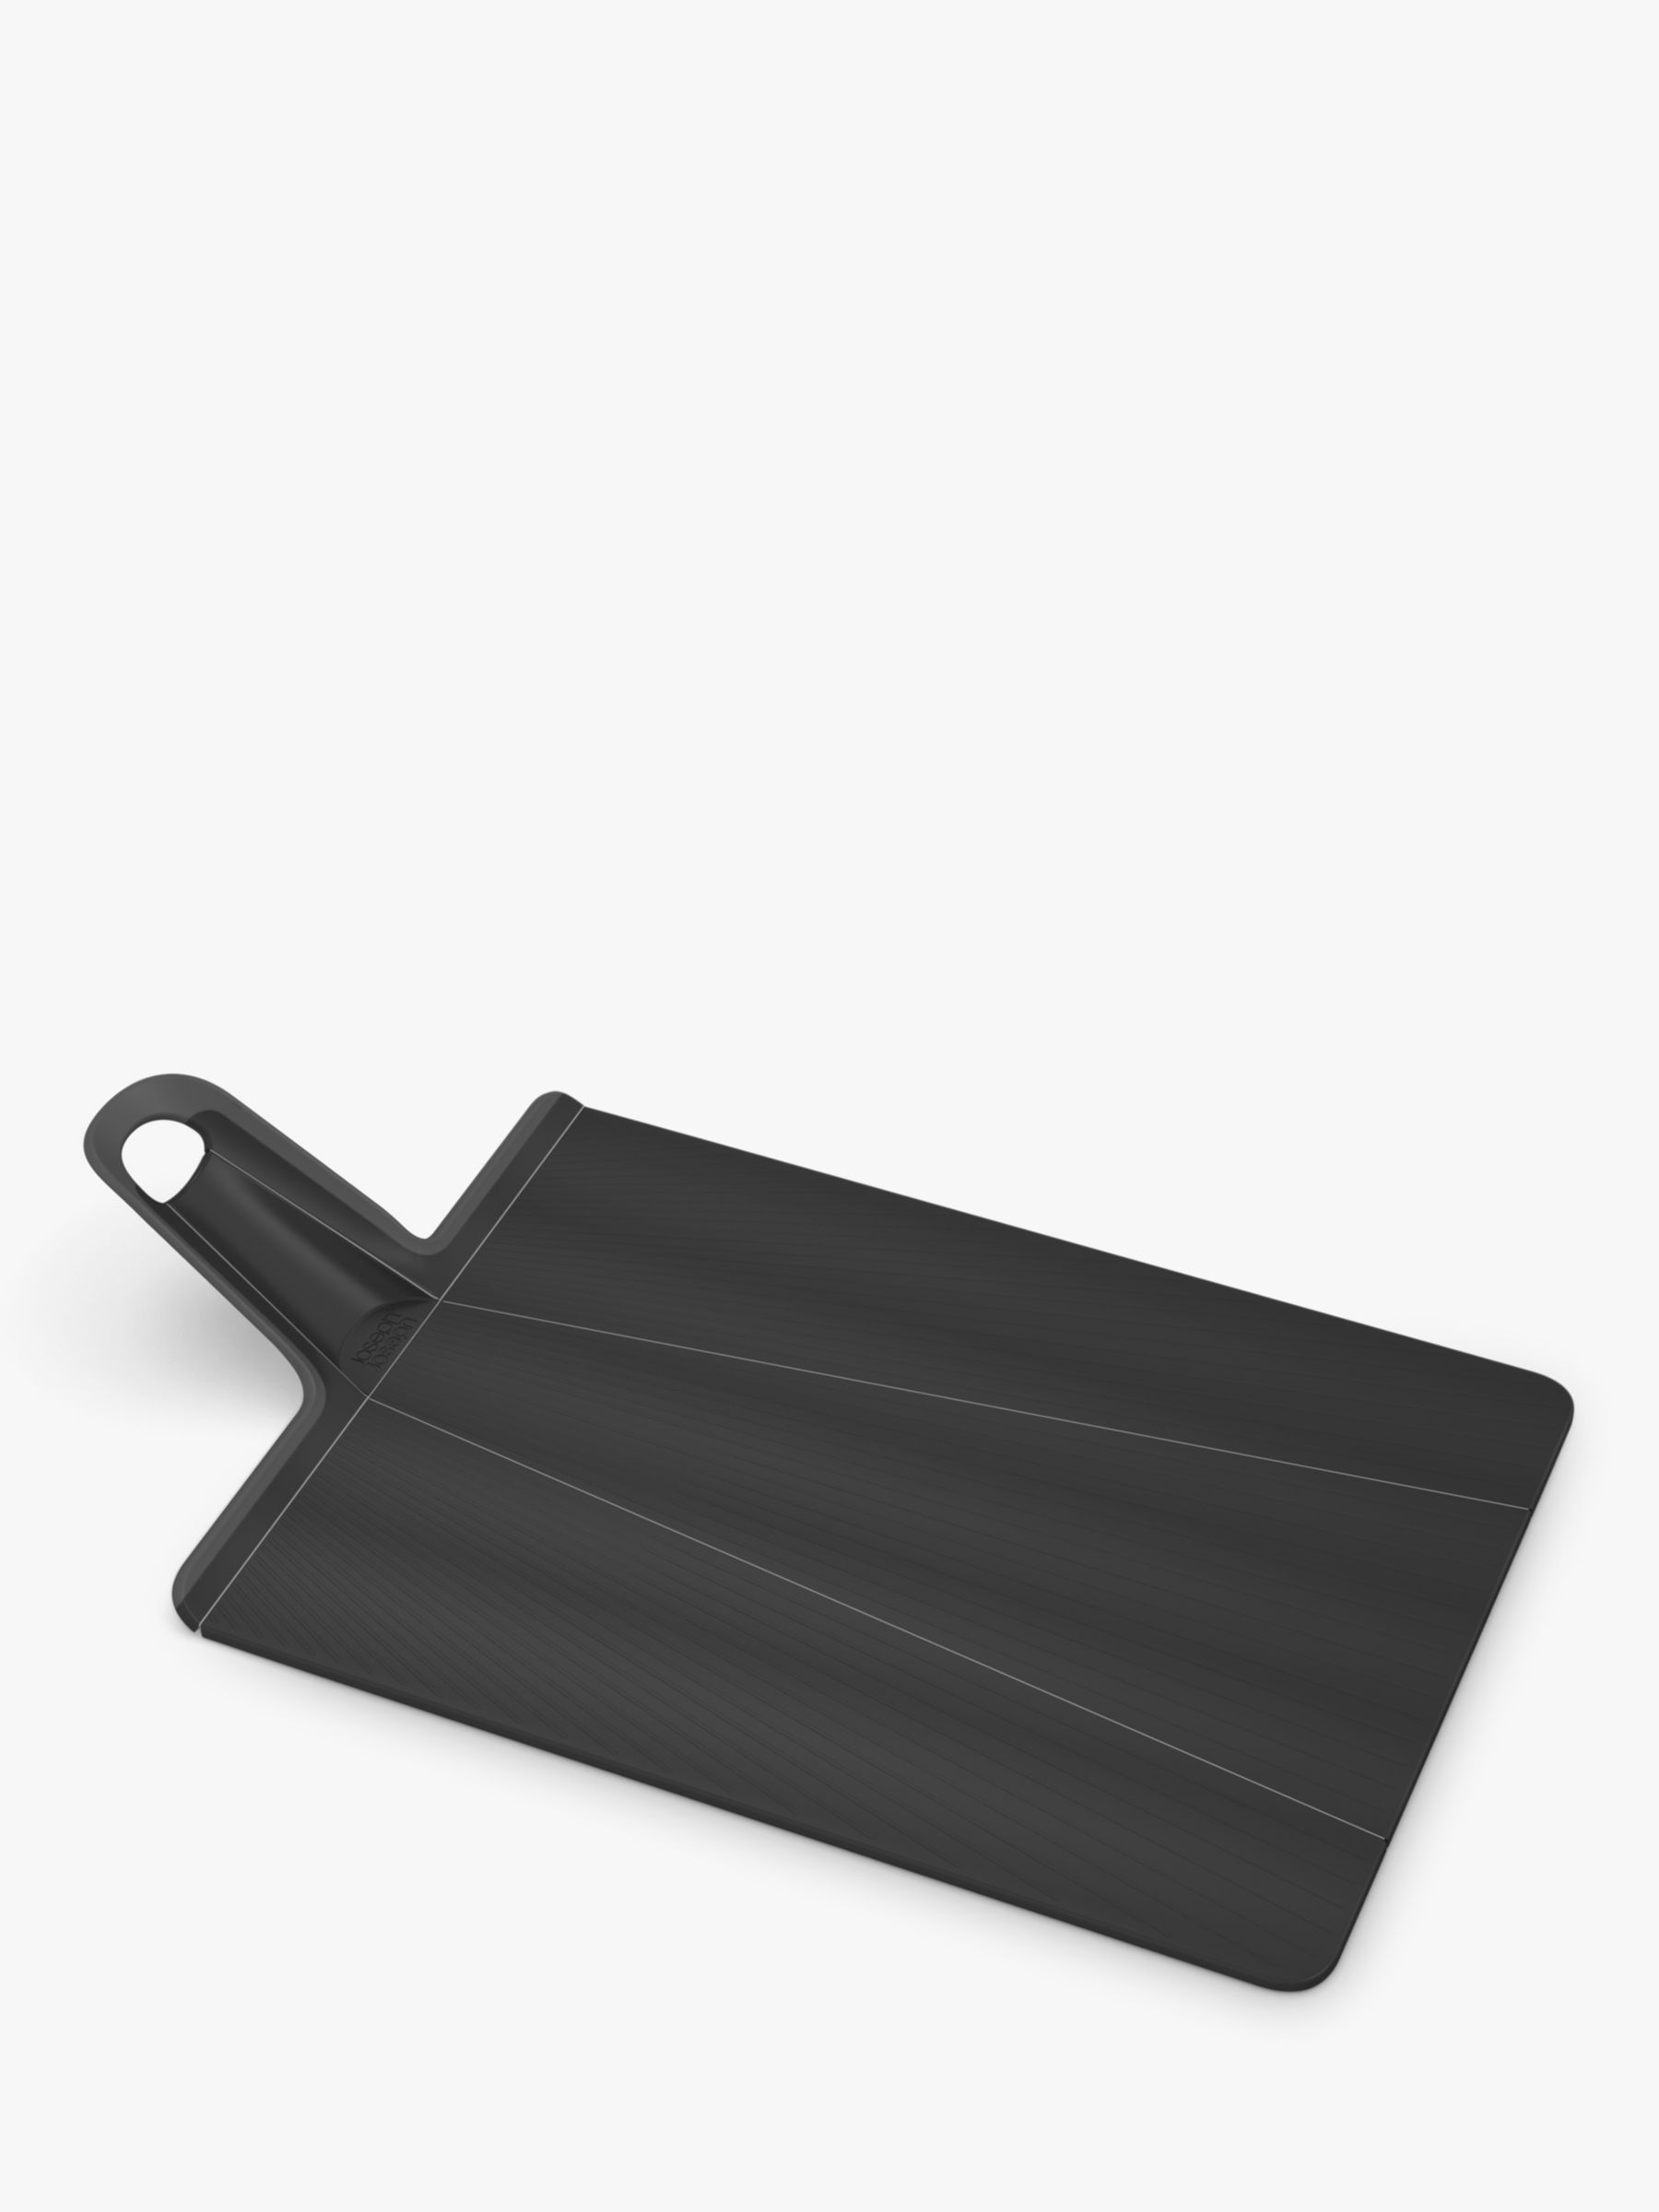 Joseph Joseph Chop2Pot Plus Foldable Plastic Cutting Board & Kitchen Prep  Mat, Small, Black - Bed Bath & Beyond - 18700357